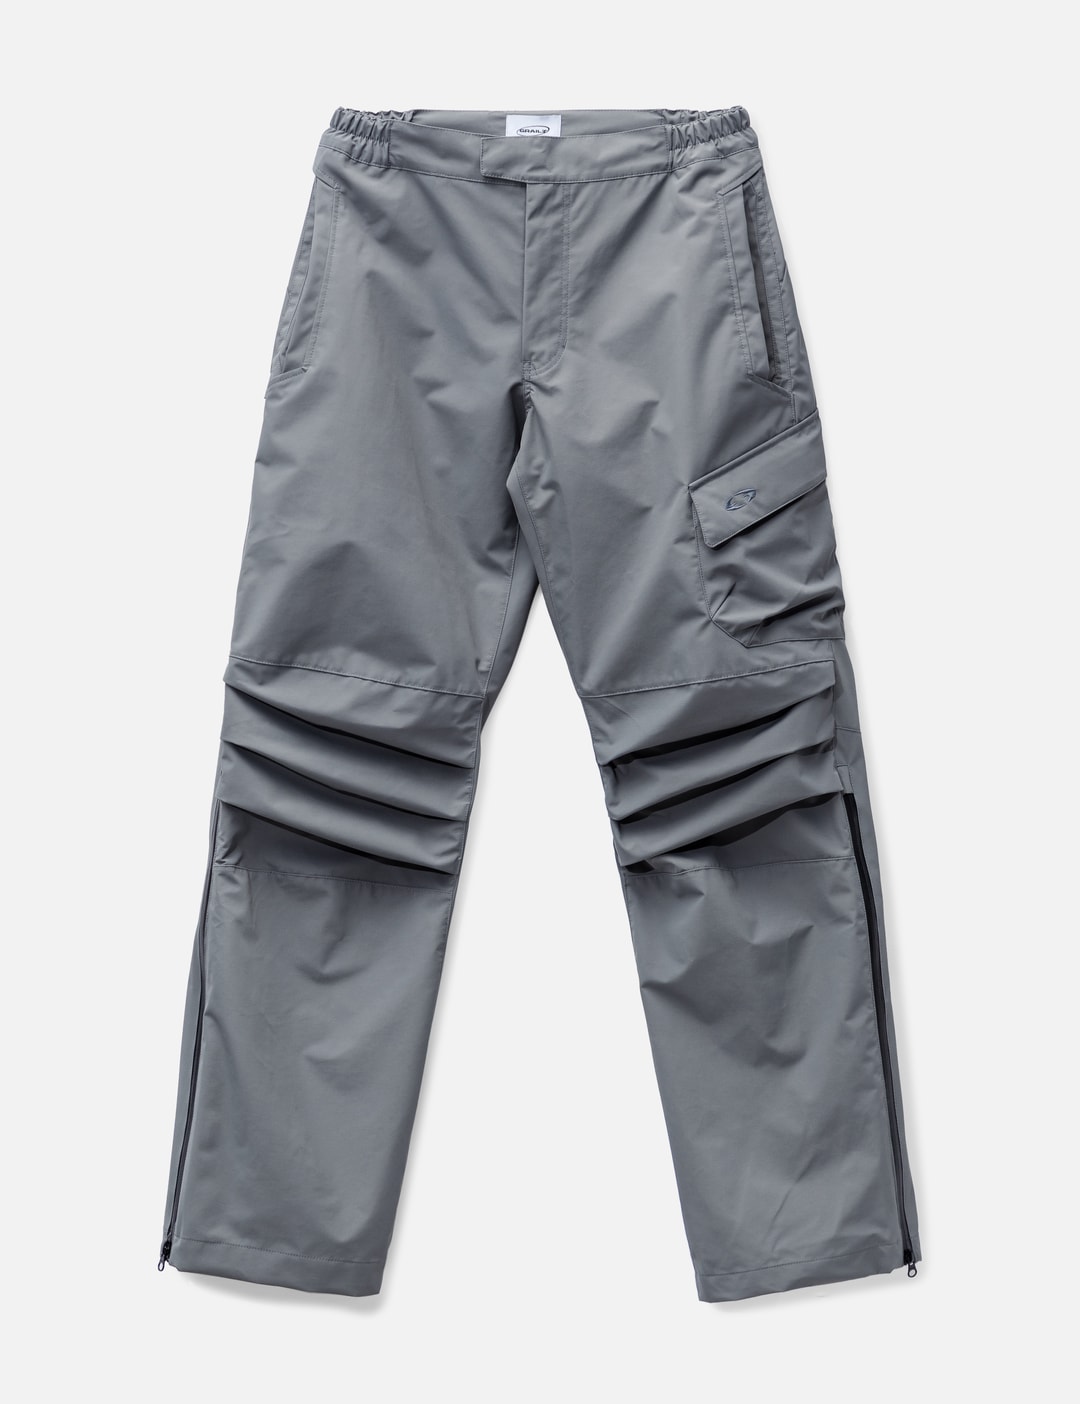 GRAILZ - Nylon Pintuck Pants | HBX - Globally Curated Fashion and ...